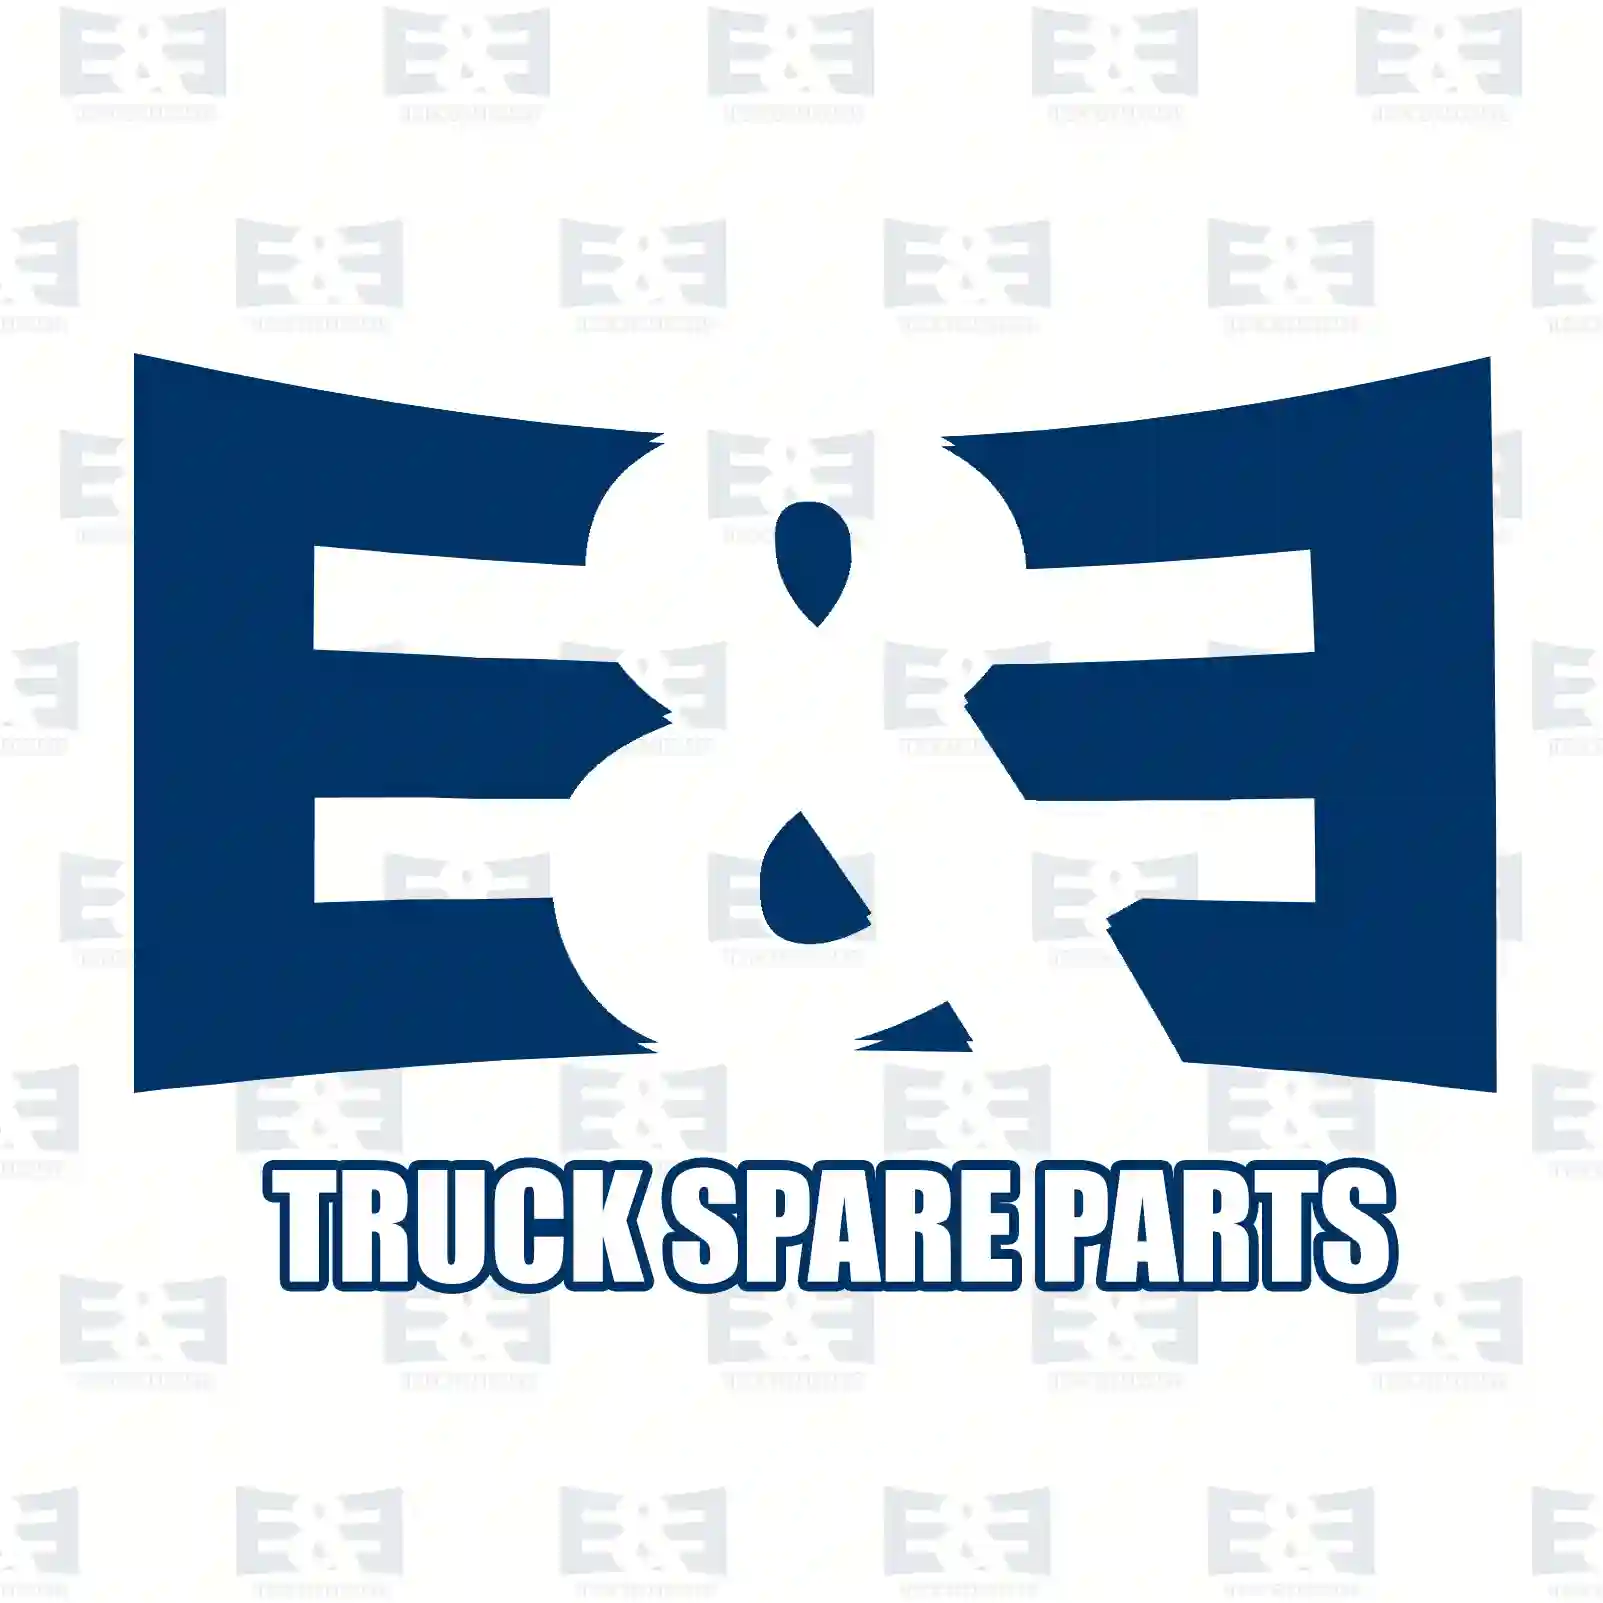 Ball joint, right hand thread, 2E2279239, 1527234, 1668638, 382745, ZG40140-0008, , , ||  2E2279239 E&E Truck Spare Parts | Truck Spare Parts, Auotomotive Spare Parts Ball joint, right hand thread, 2E2279239, 1527234, 1668638, 382745, ZG40140-0008, , , ||  2E2279239 E&E Truck Spare Parts | Truck Spare Parts, Auotomotive Spare Parts